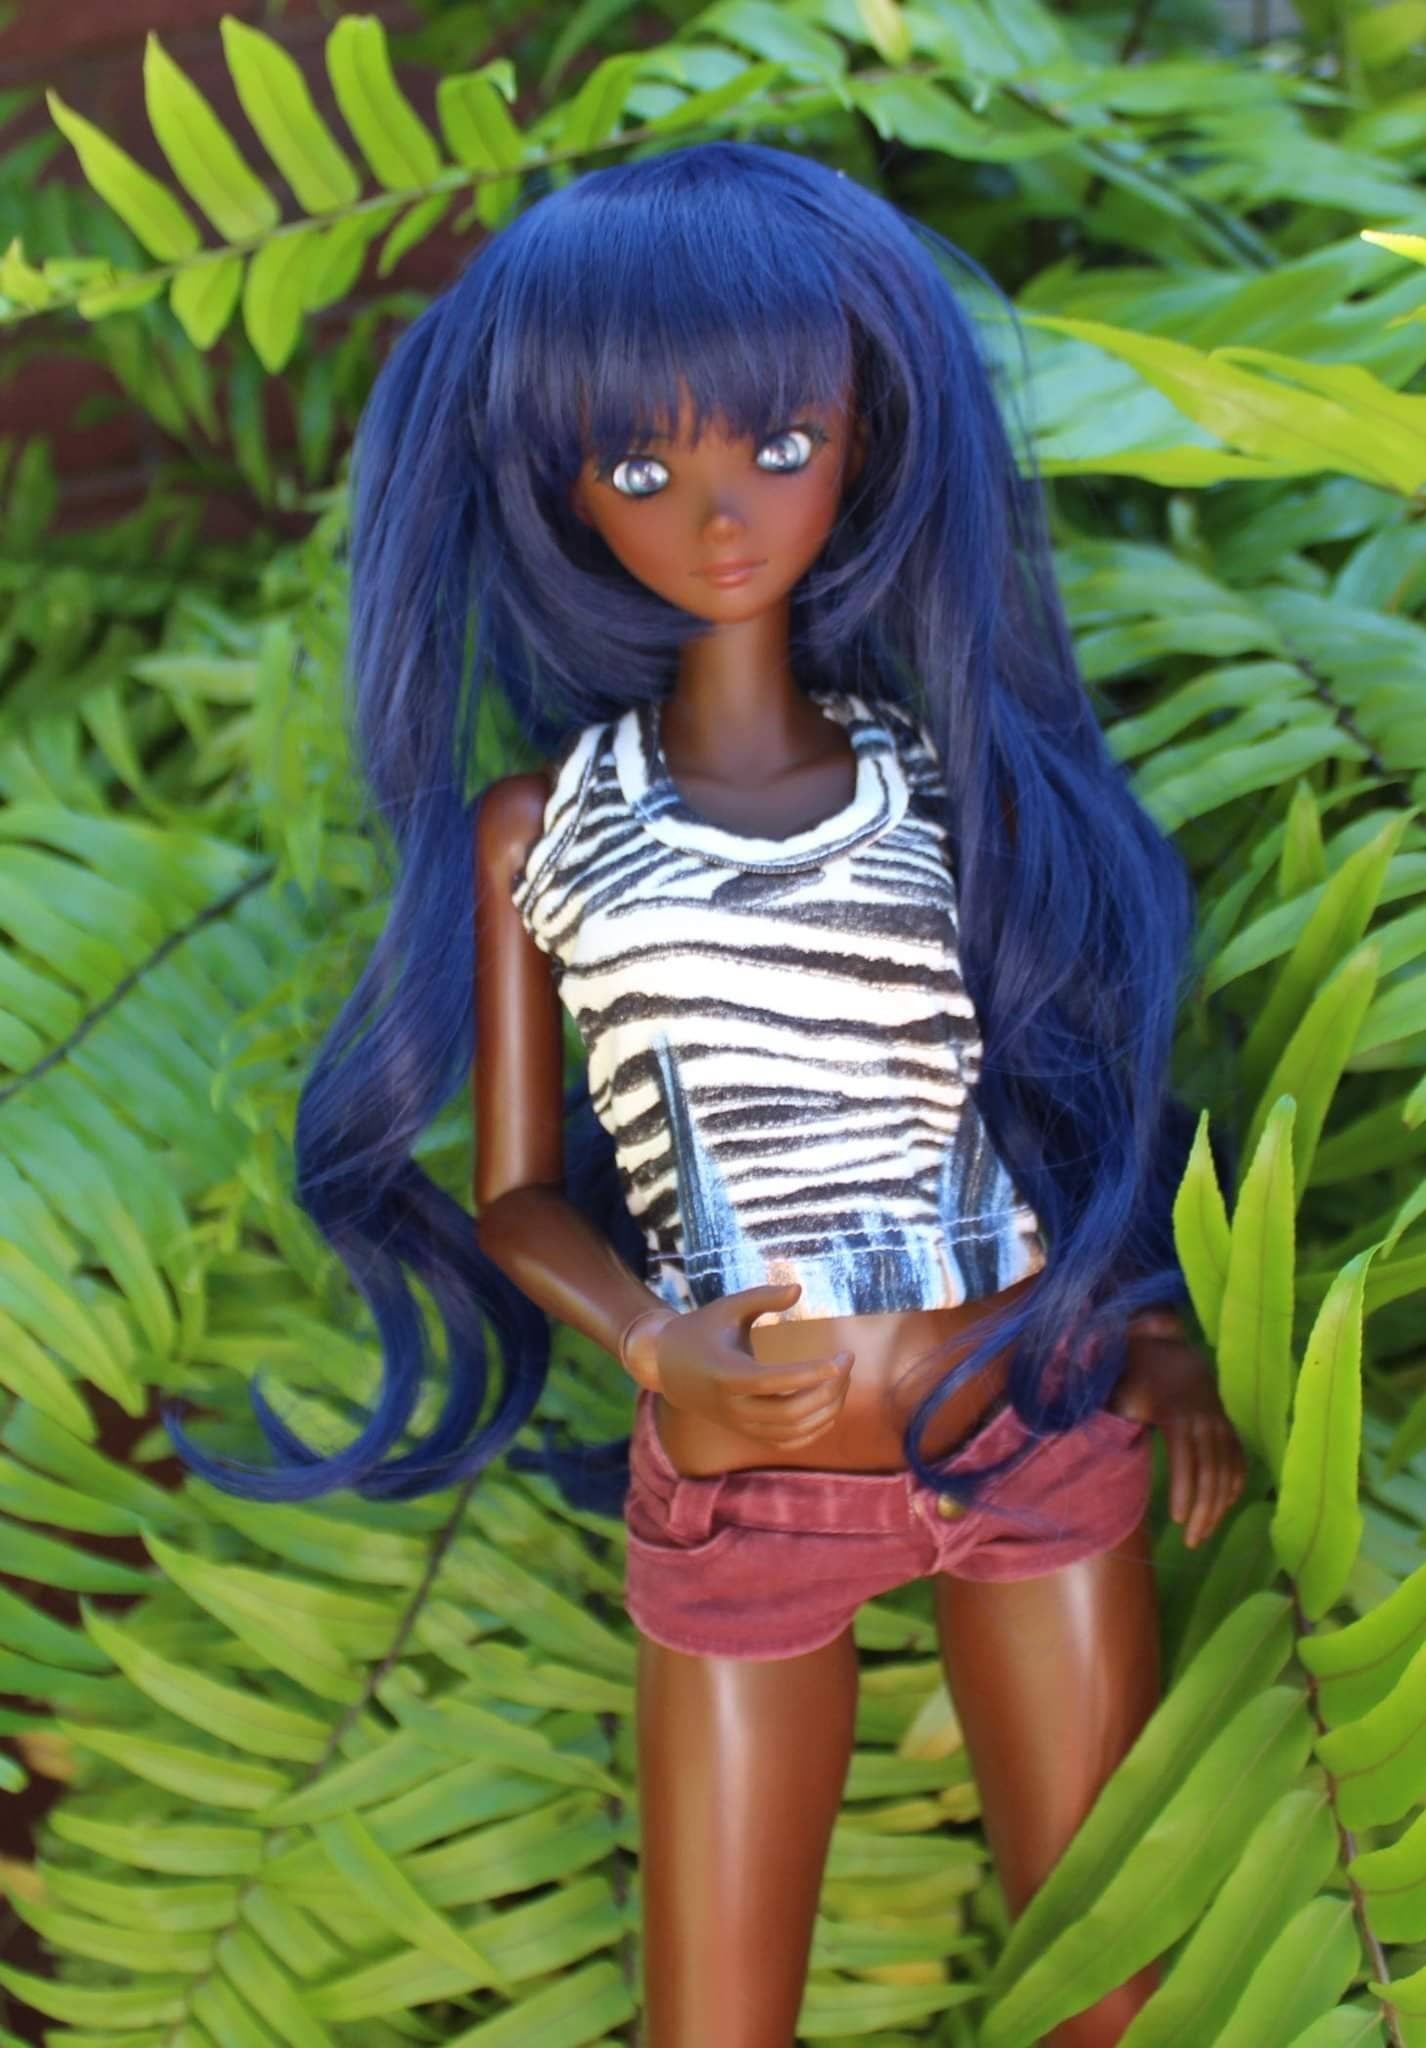 Custom doll WIG for Smart Dolls- Heat Safe - Tangle Resistant- 8.5" head size of Bjd, SD, Dollfie Dream dolls  dark blue anime Limited